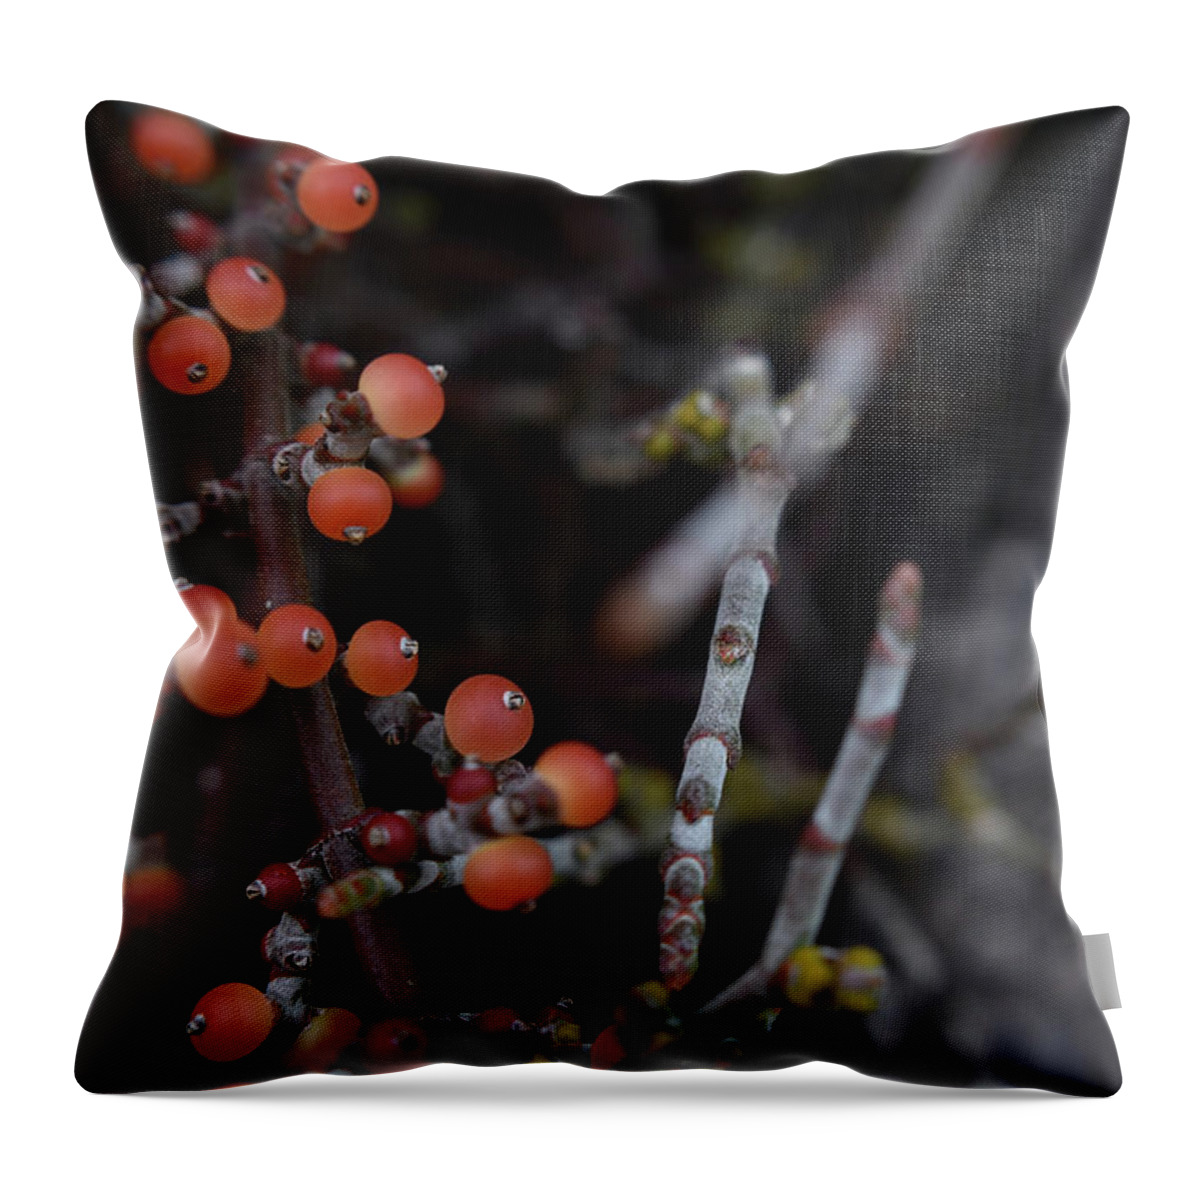 Berries Throw Pillow featuring the photograph Mistletoe by Melisa Elliott